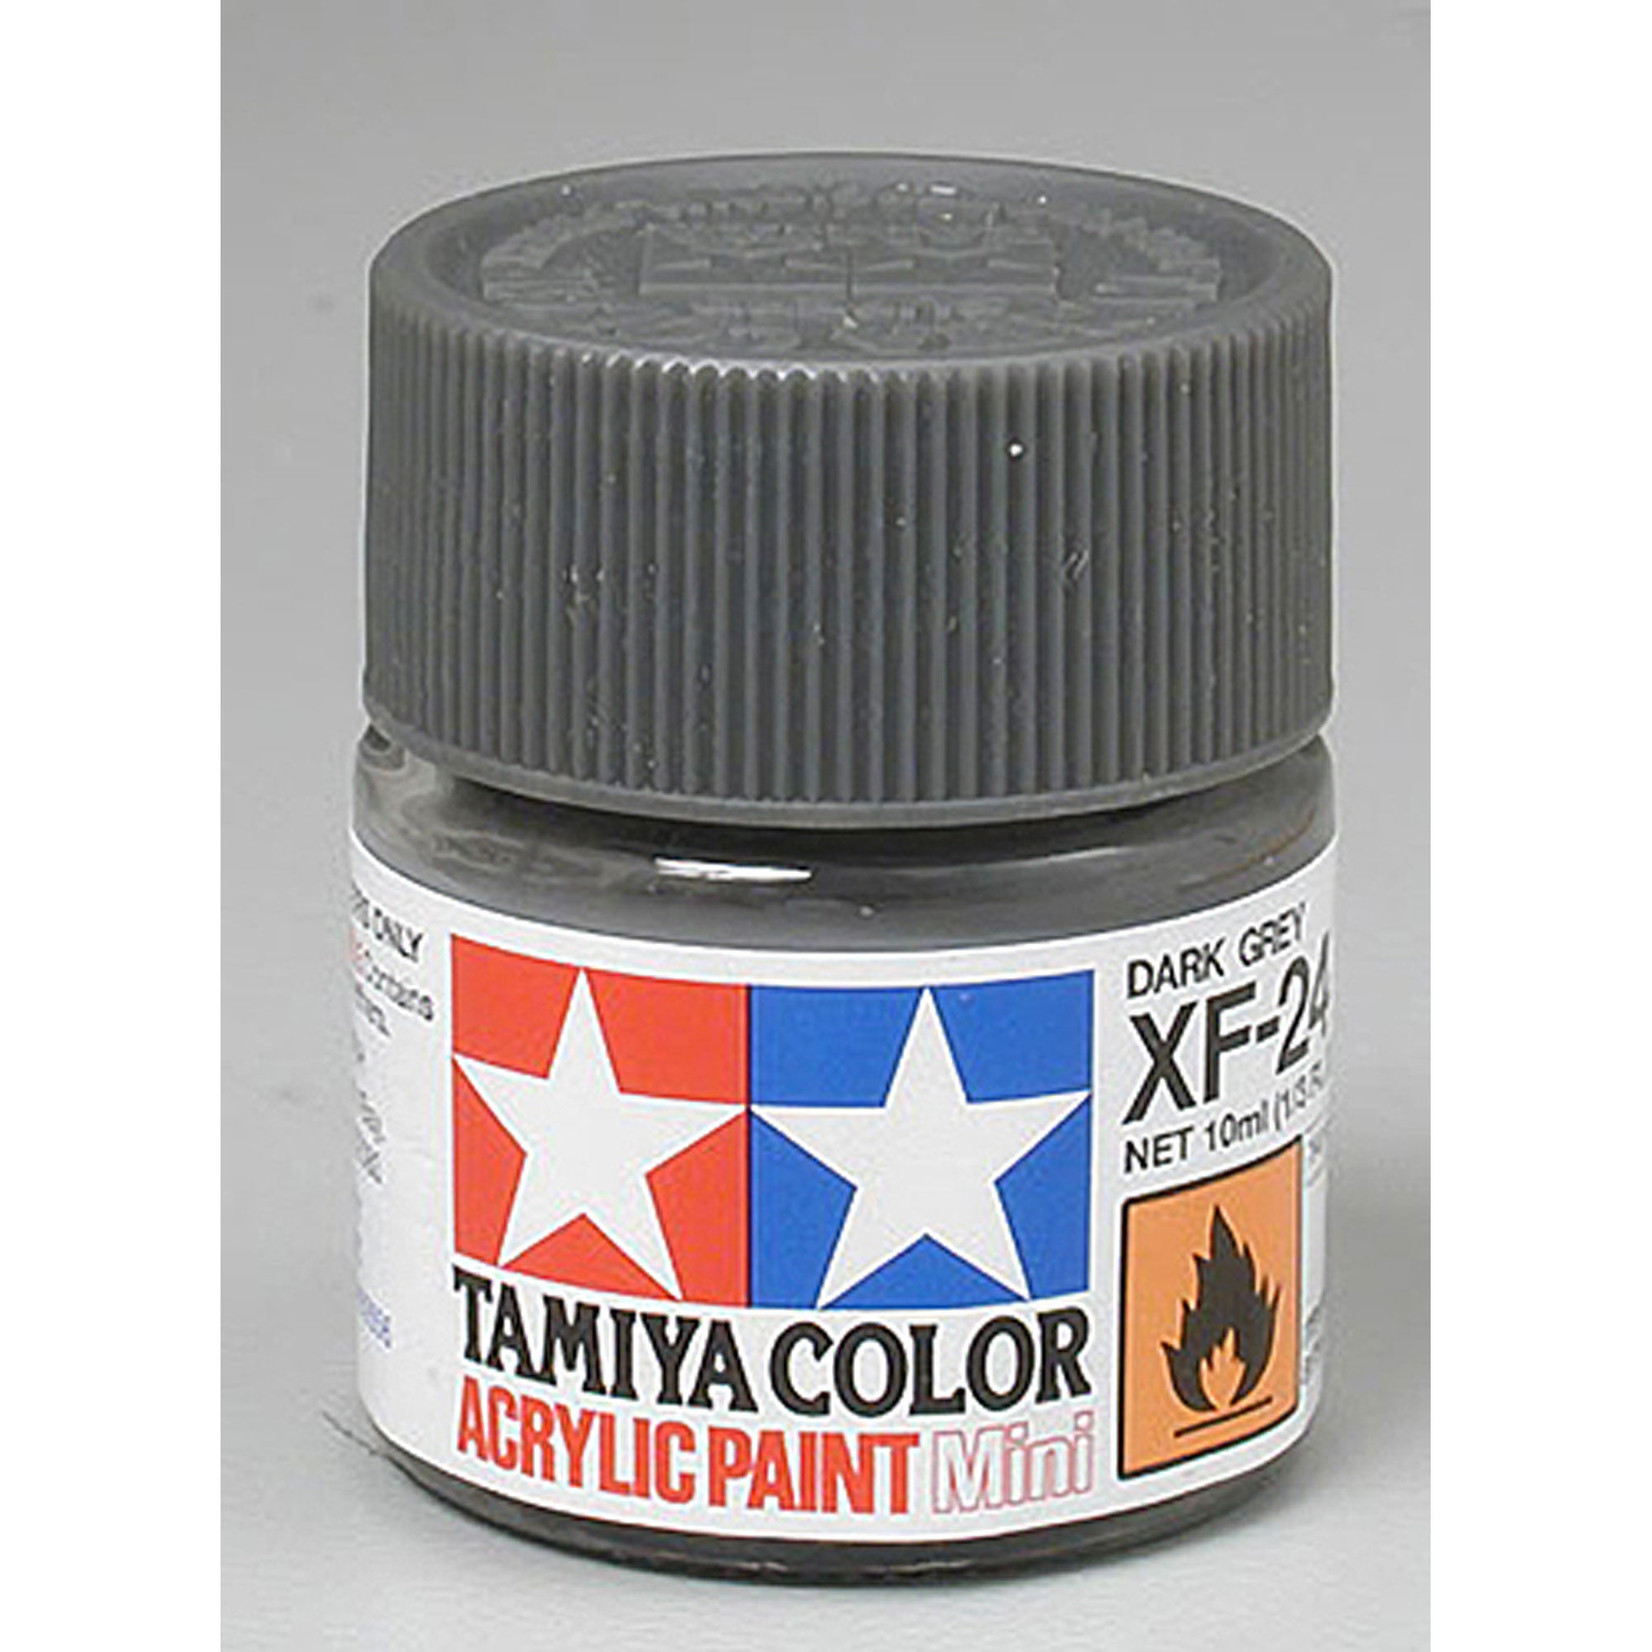 Tamiya Acrylic Mini XF24, Dark Grey